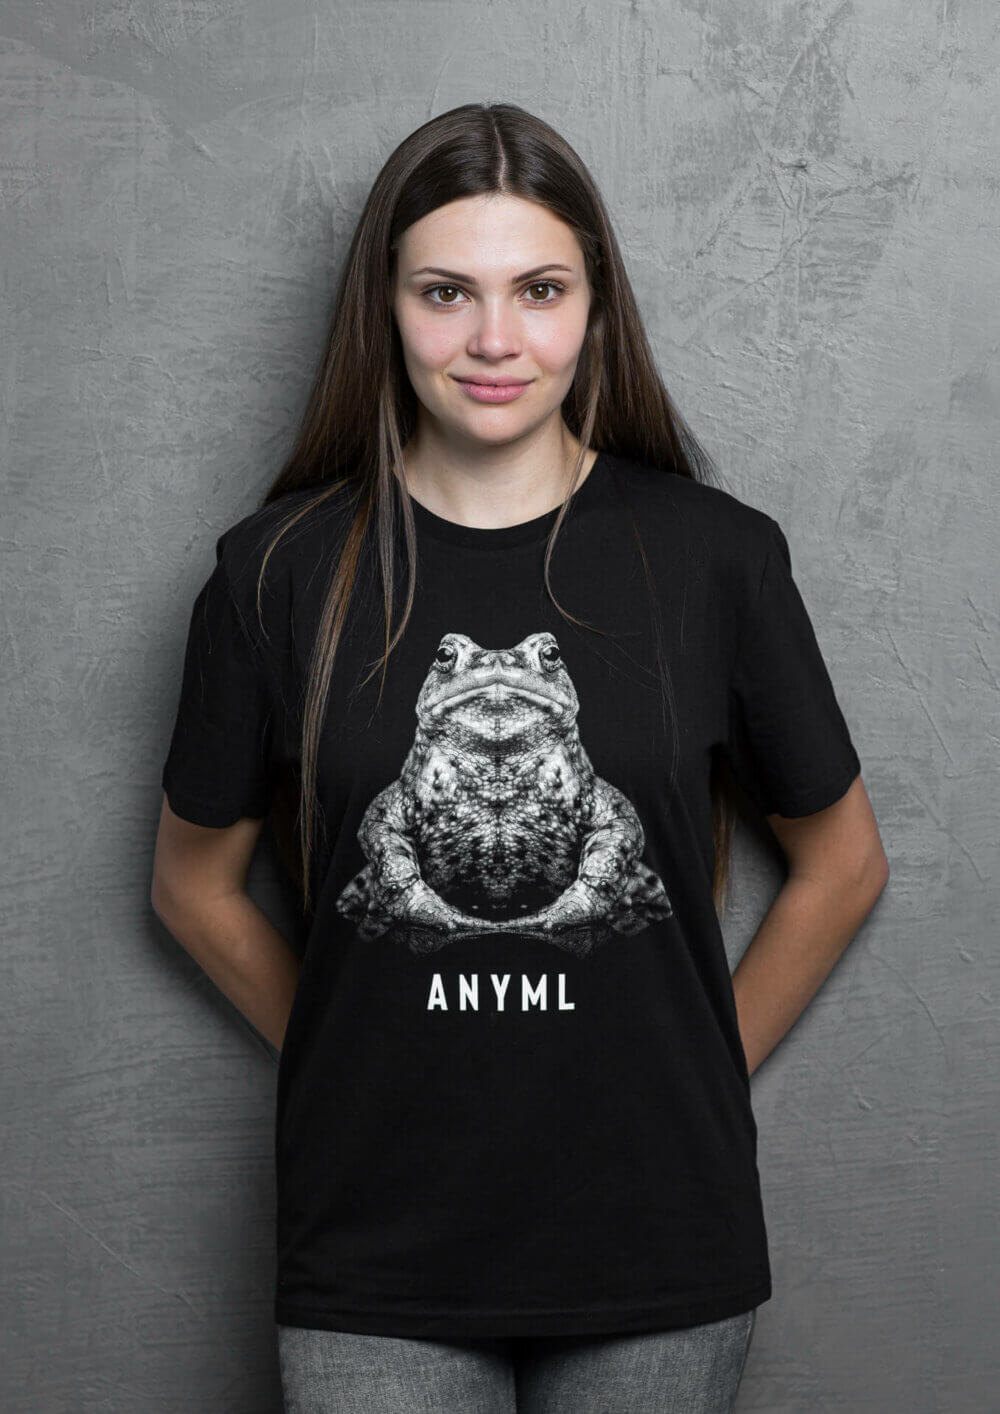 ANYML Shirt - Bufo bufo | Kröte 1